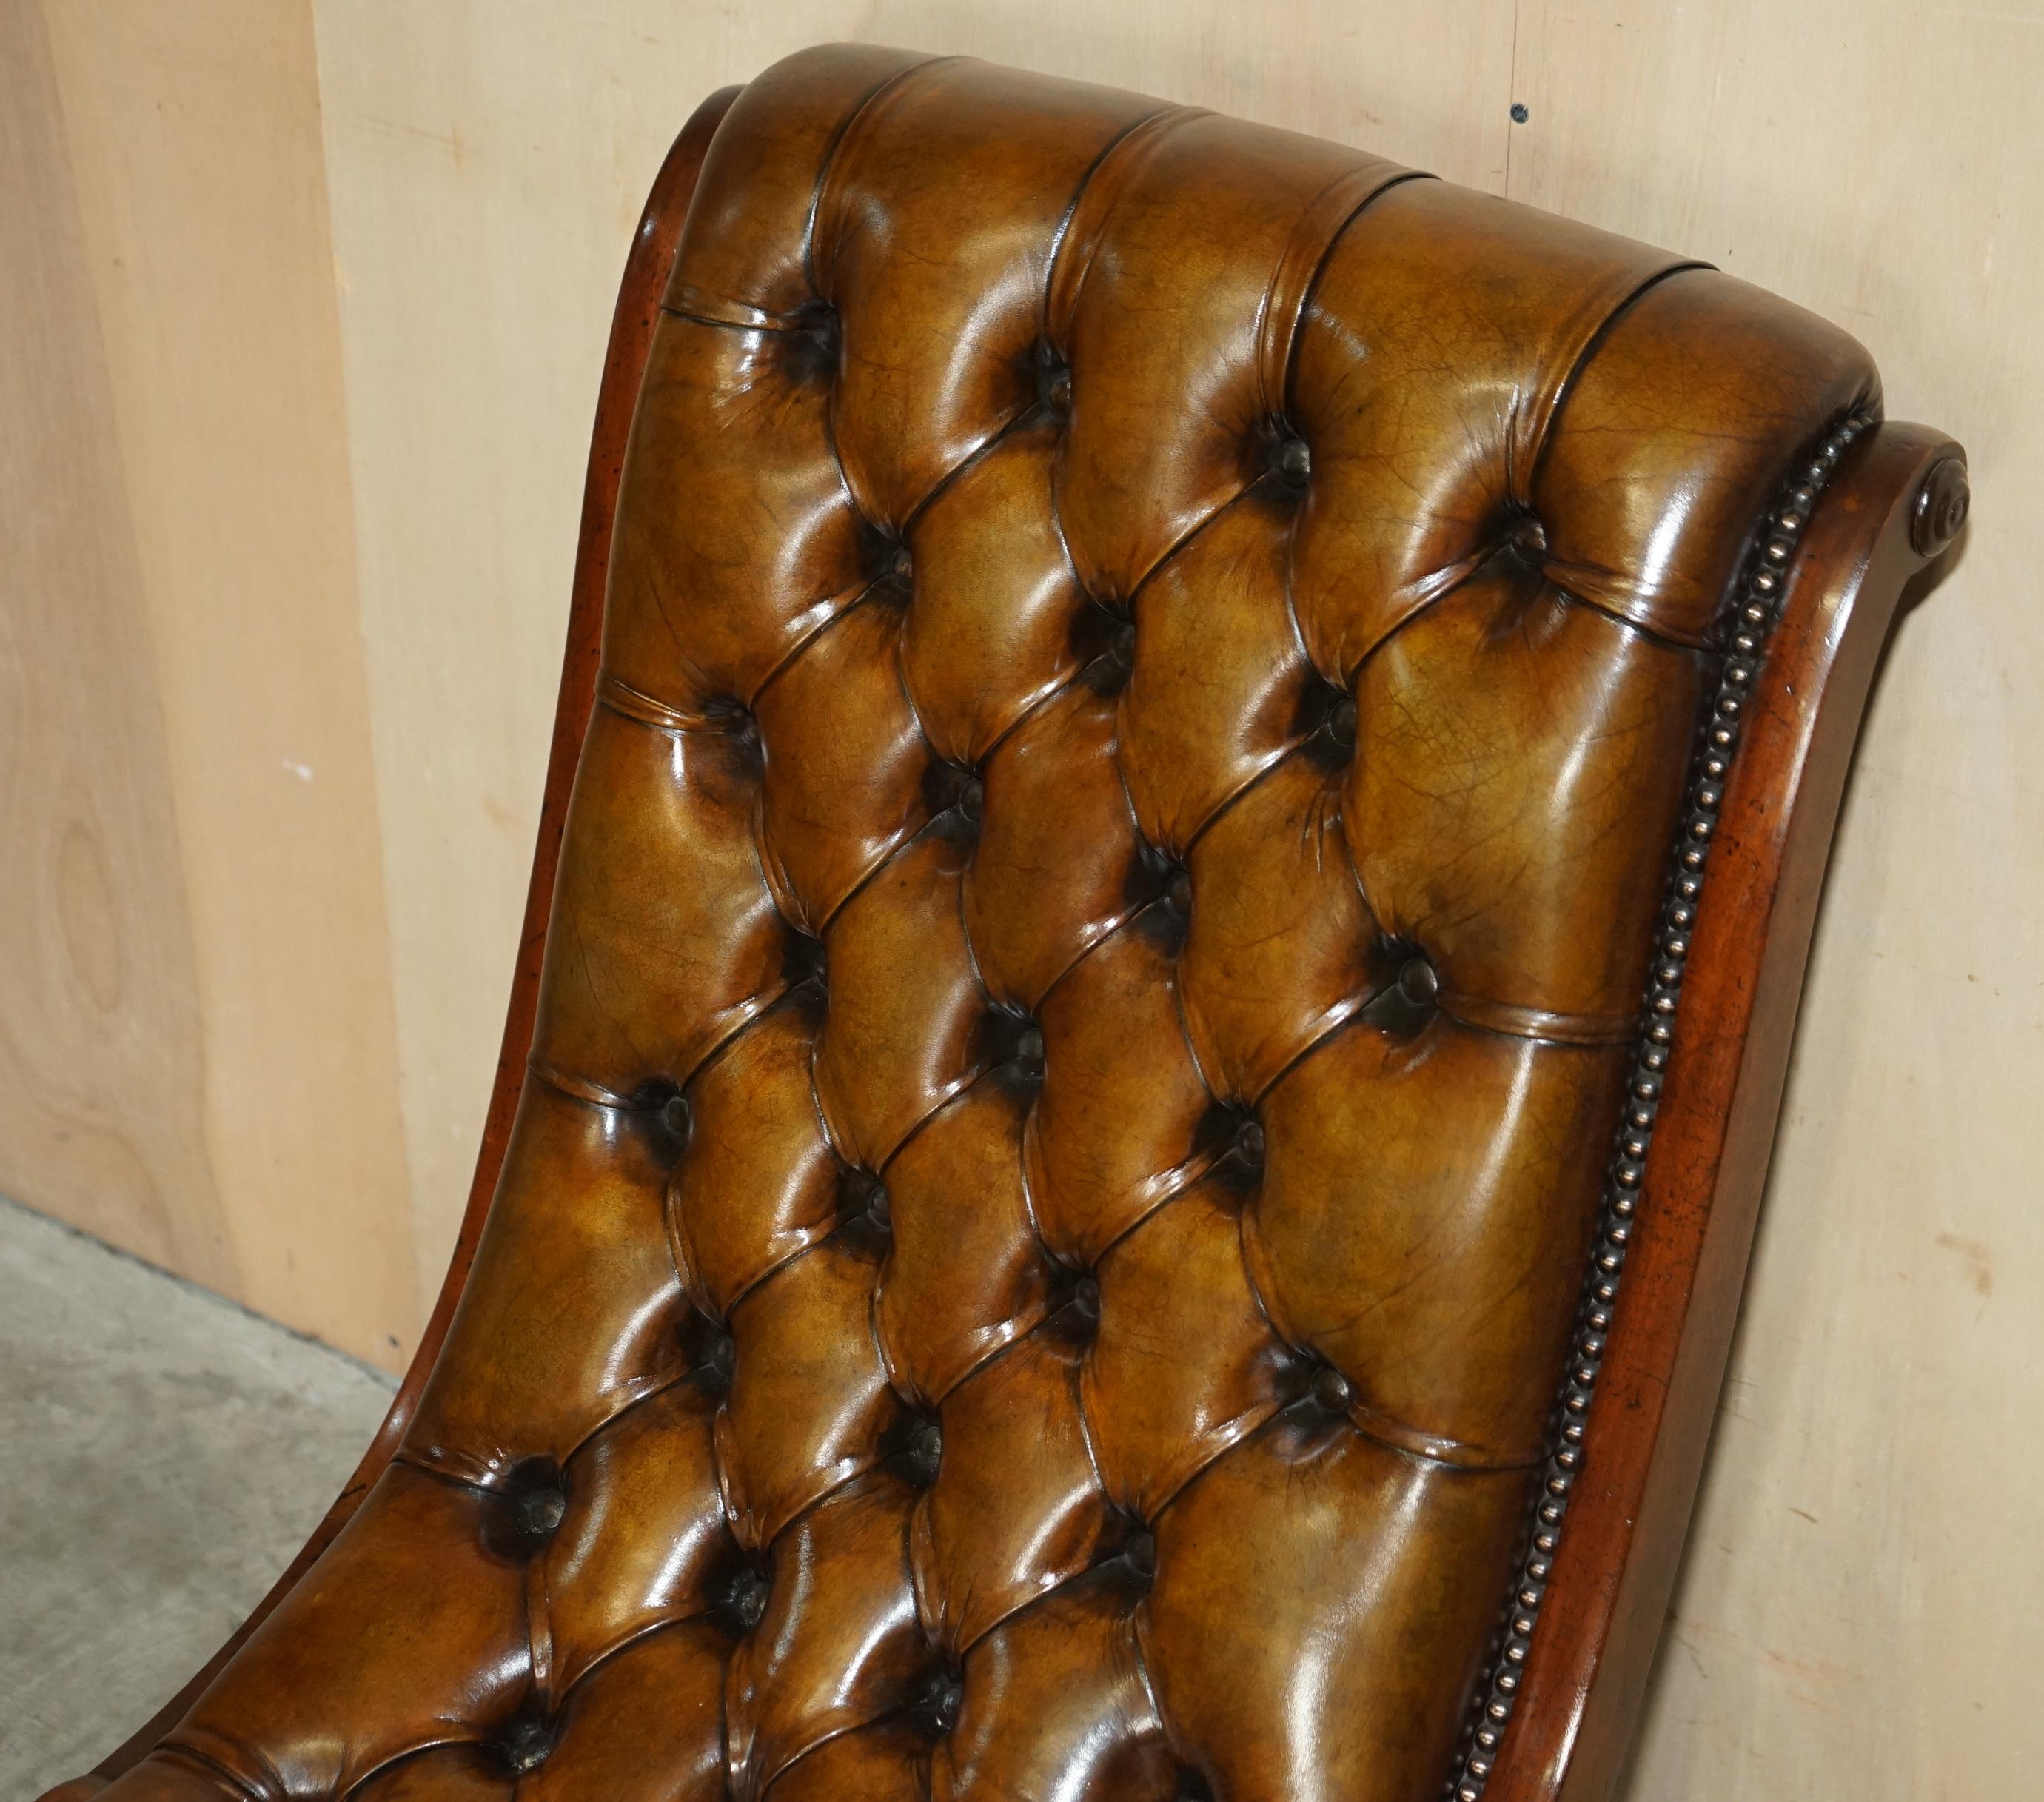 antique slipper chair value